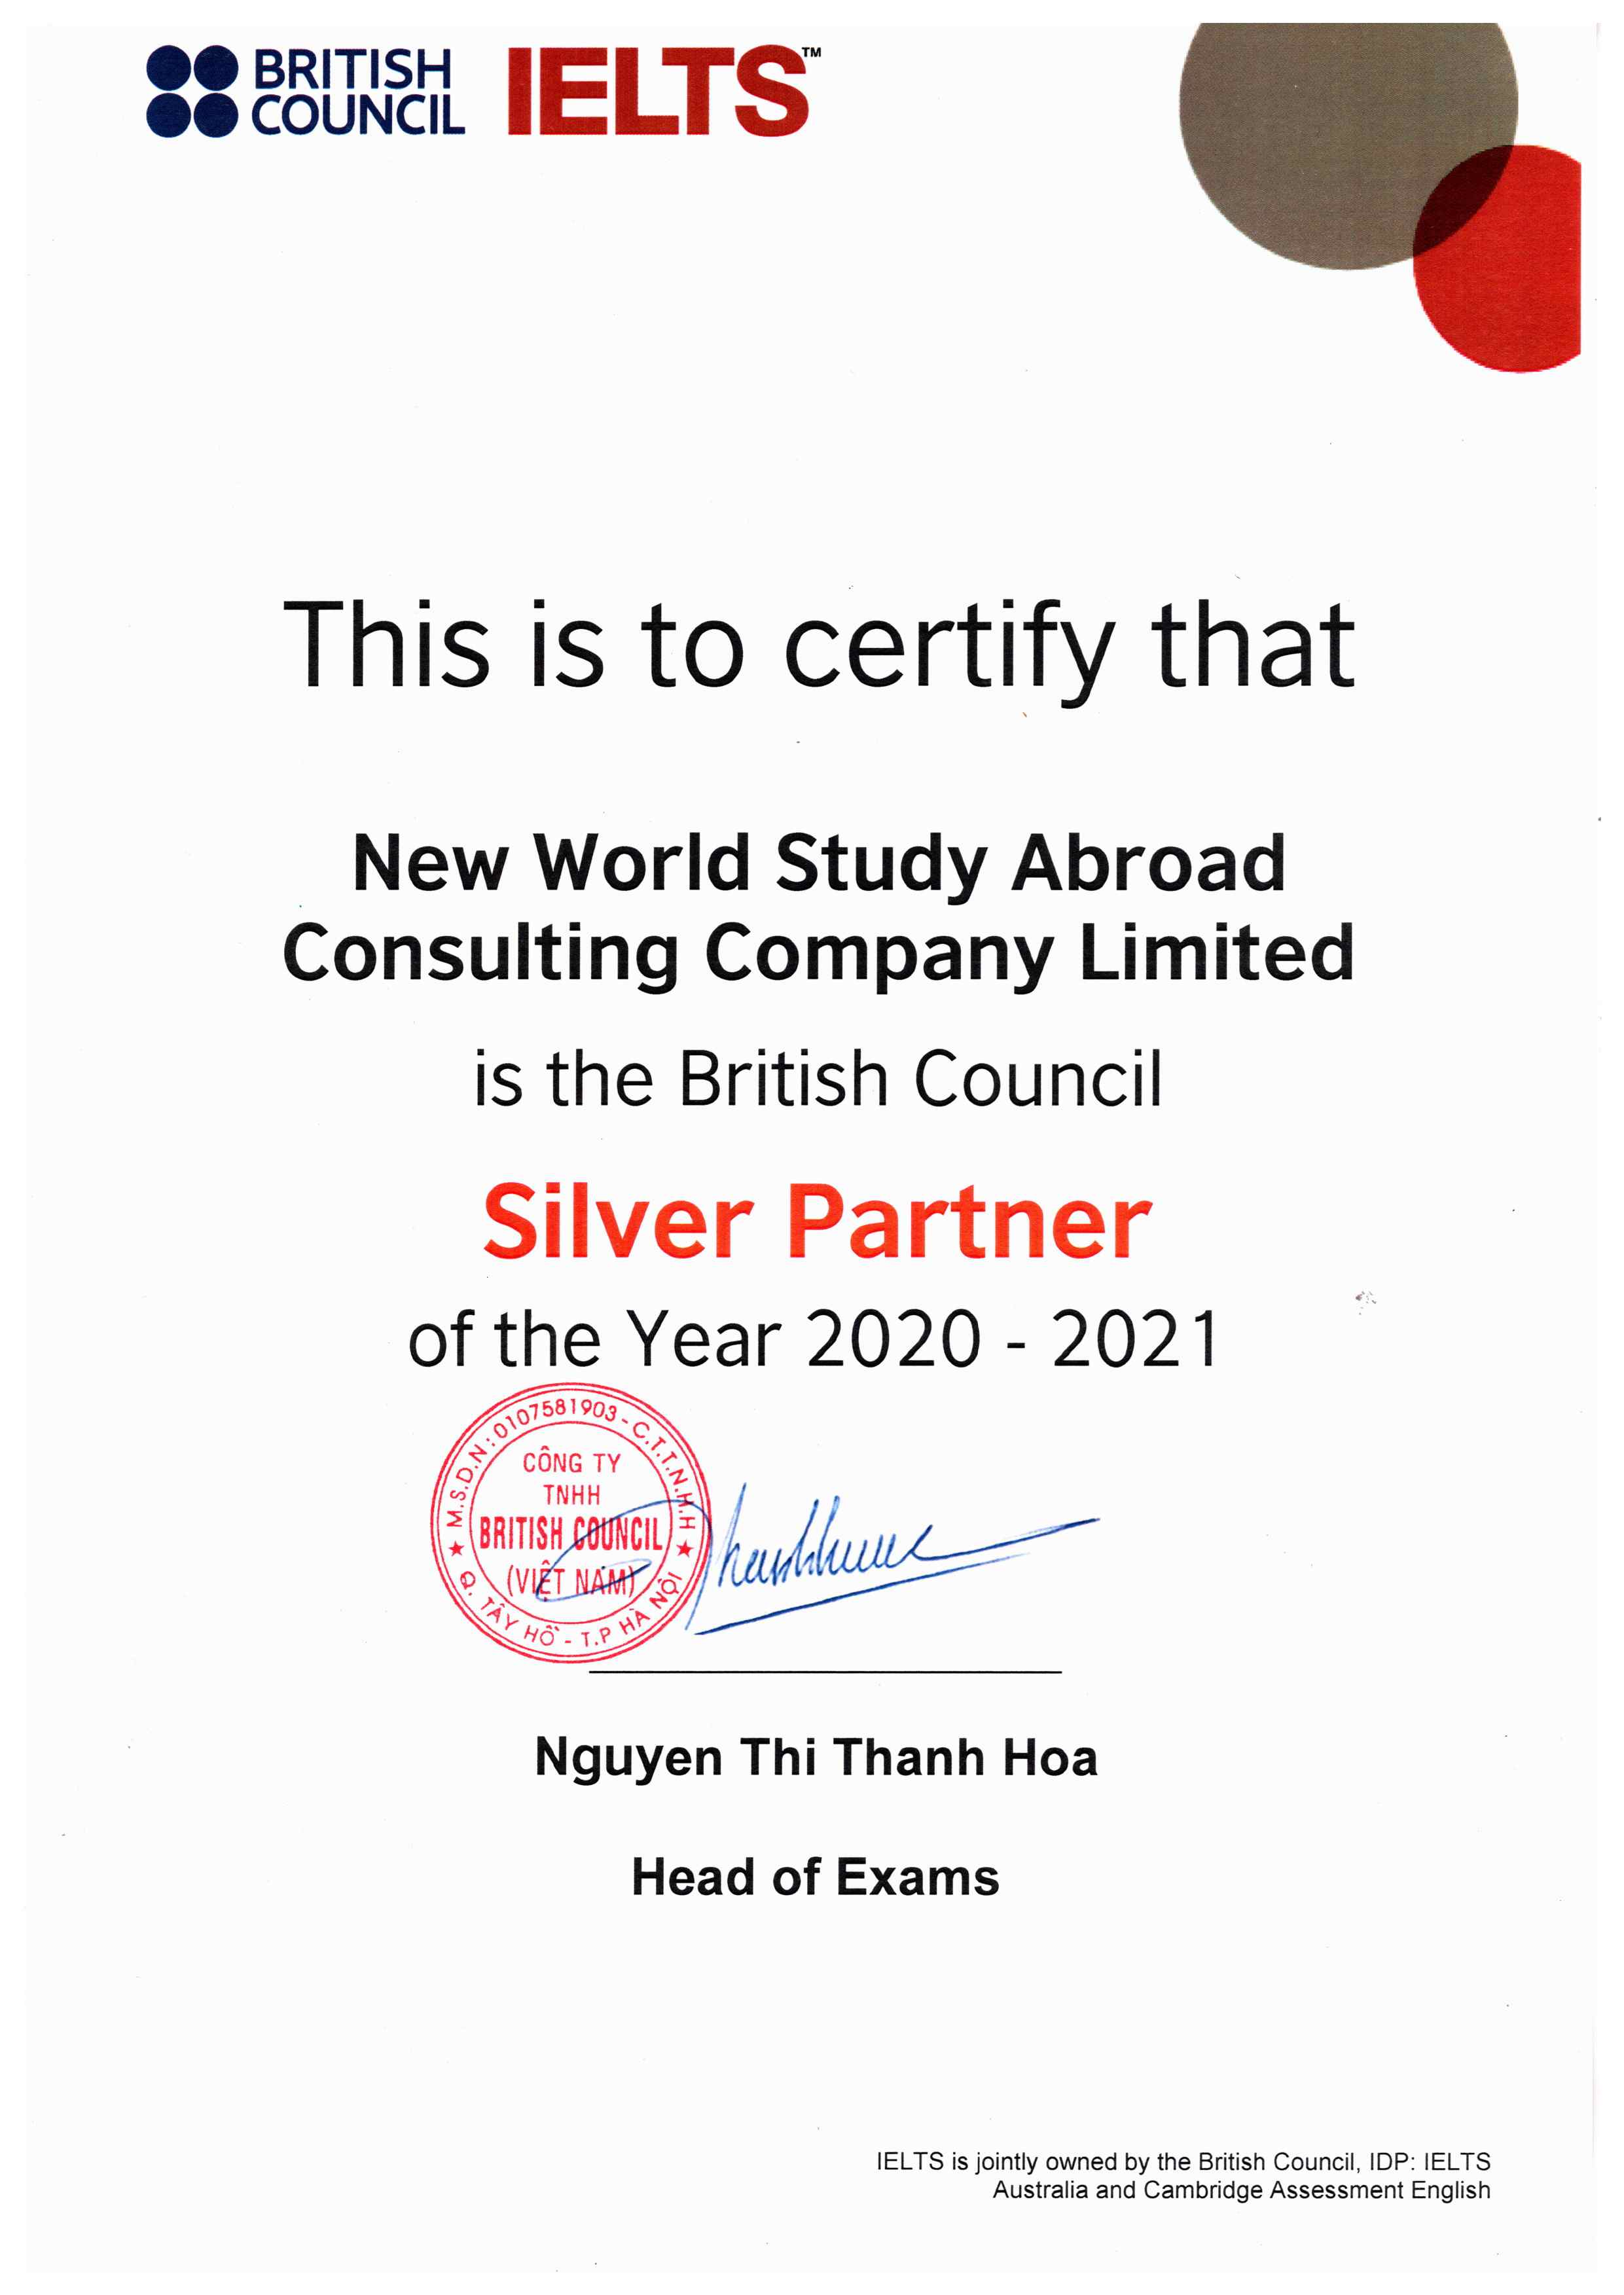 Silver Partner of British Council IELTS - 2020 2021